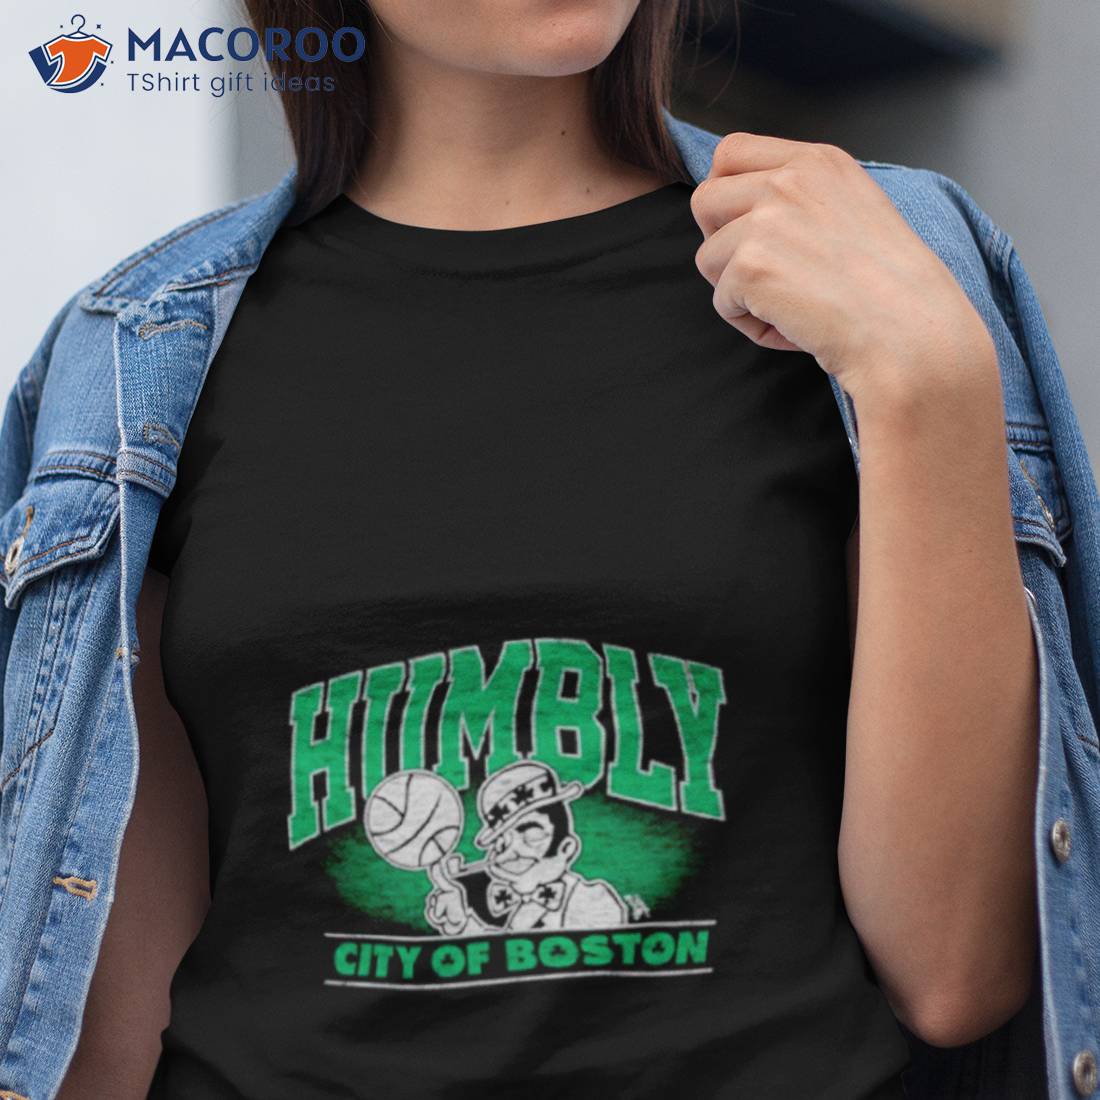 Celtics Store Boston Celtics Humbly Hoodie - Long Sleeve T Shirt,  Sweatshirt, Hoodie, T Shirt